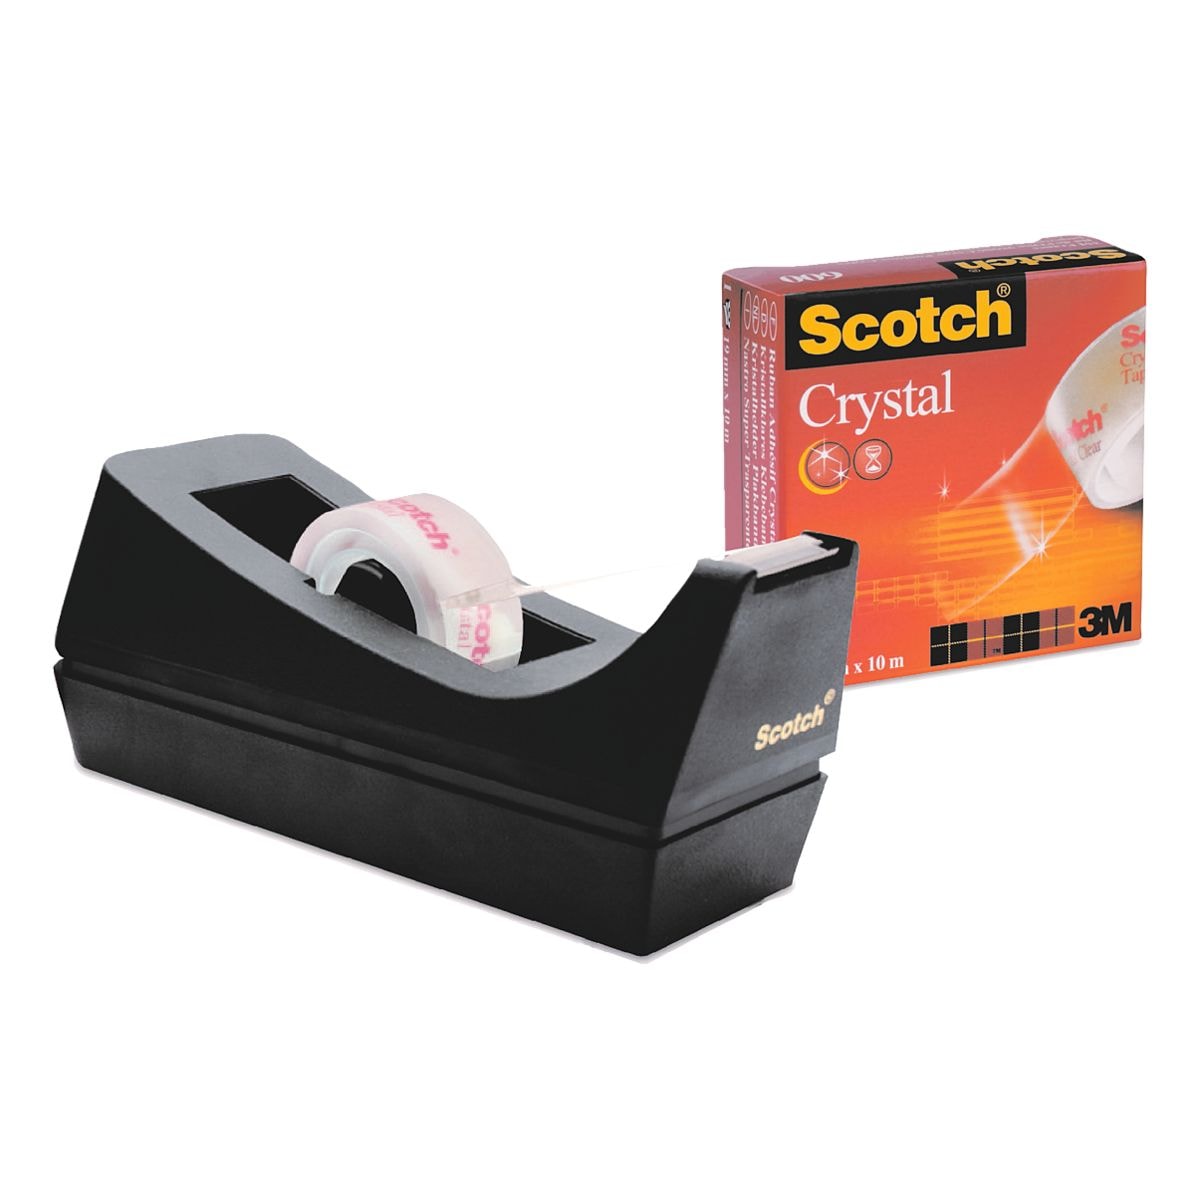 Scotch Tischabroller-Set C38 + Crystal Clear Tape 600